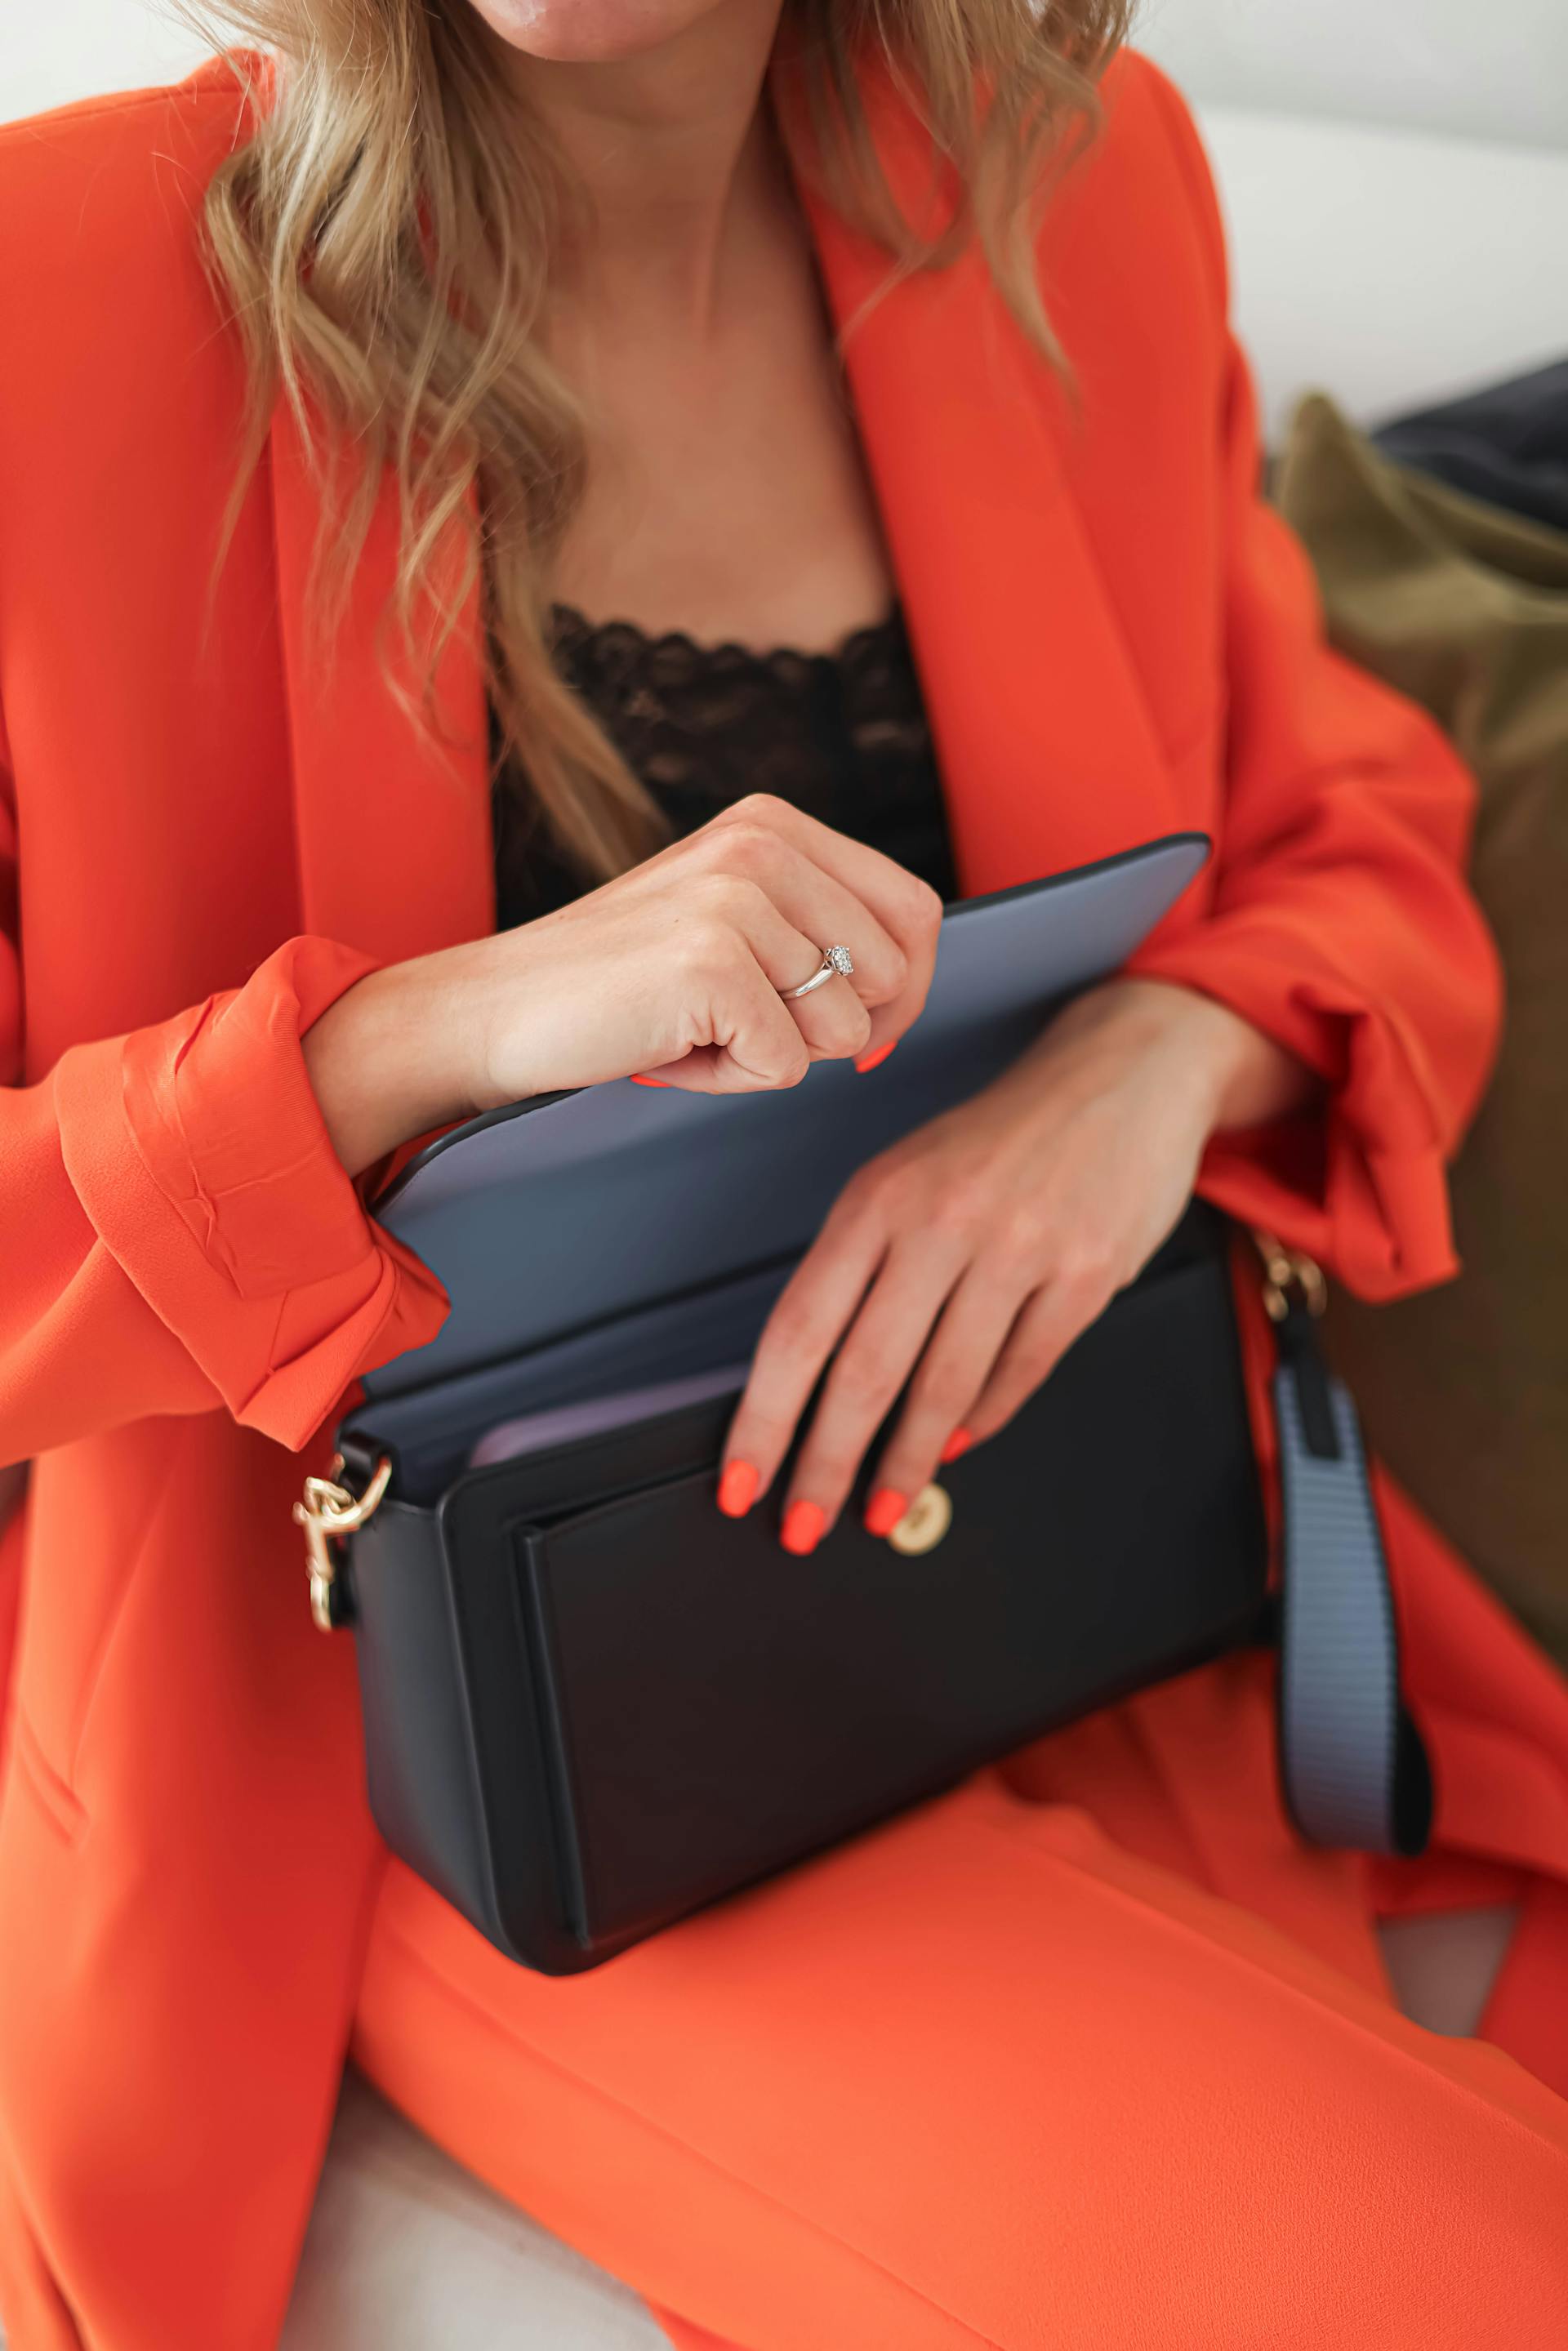 A woman opening her handbag | Source: Pexels